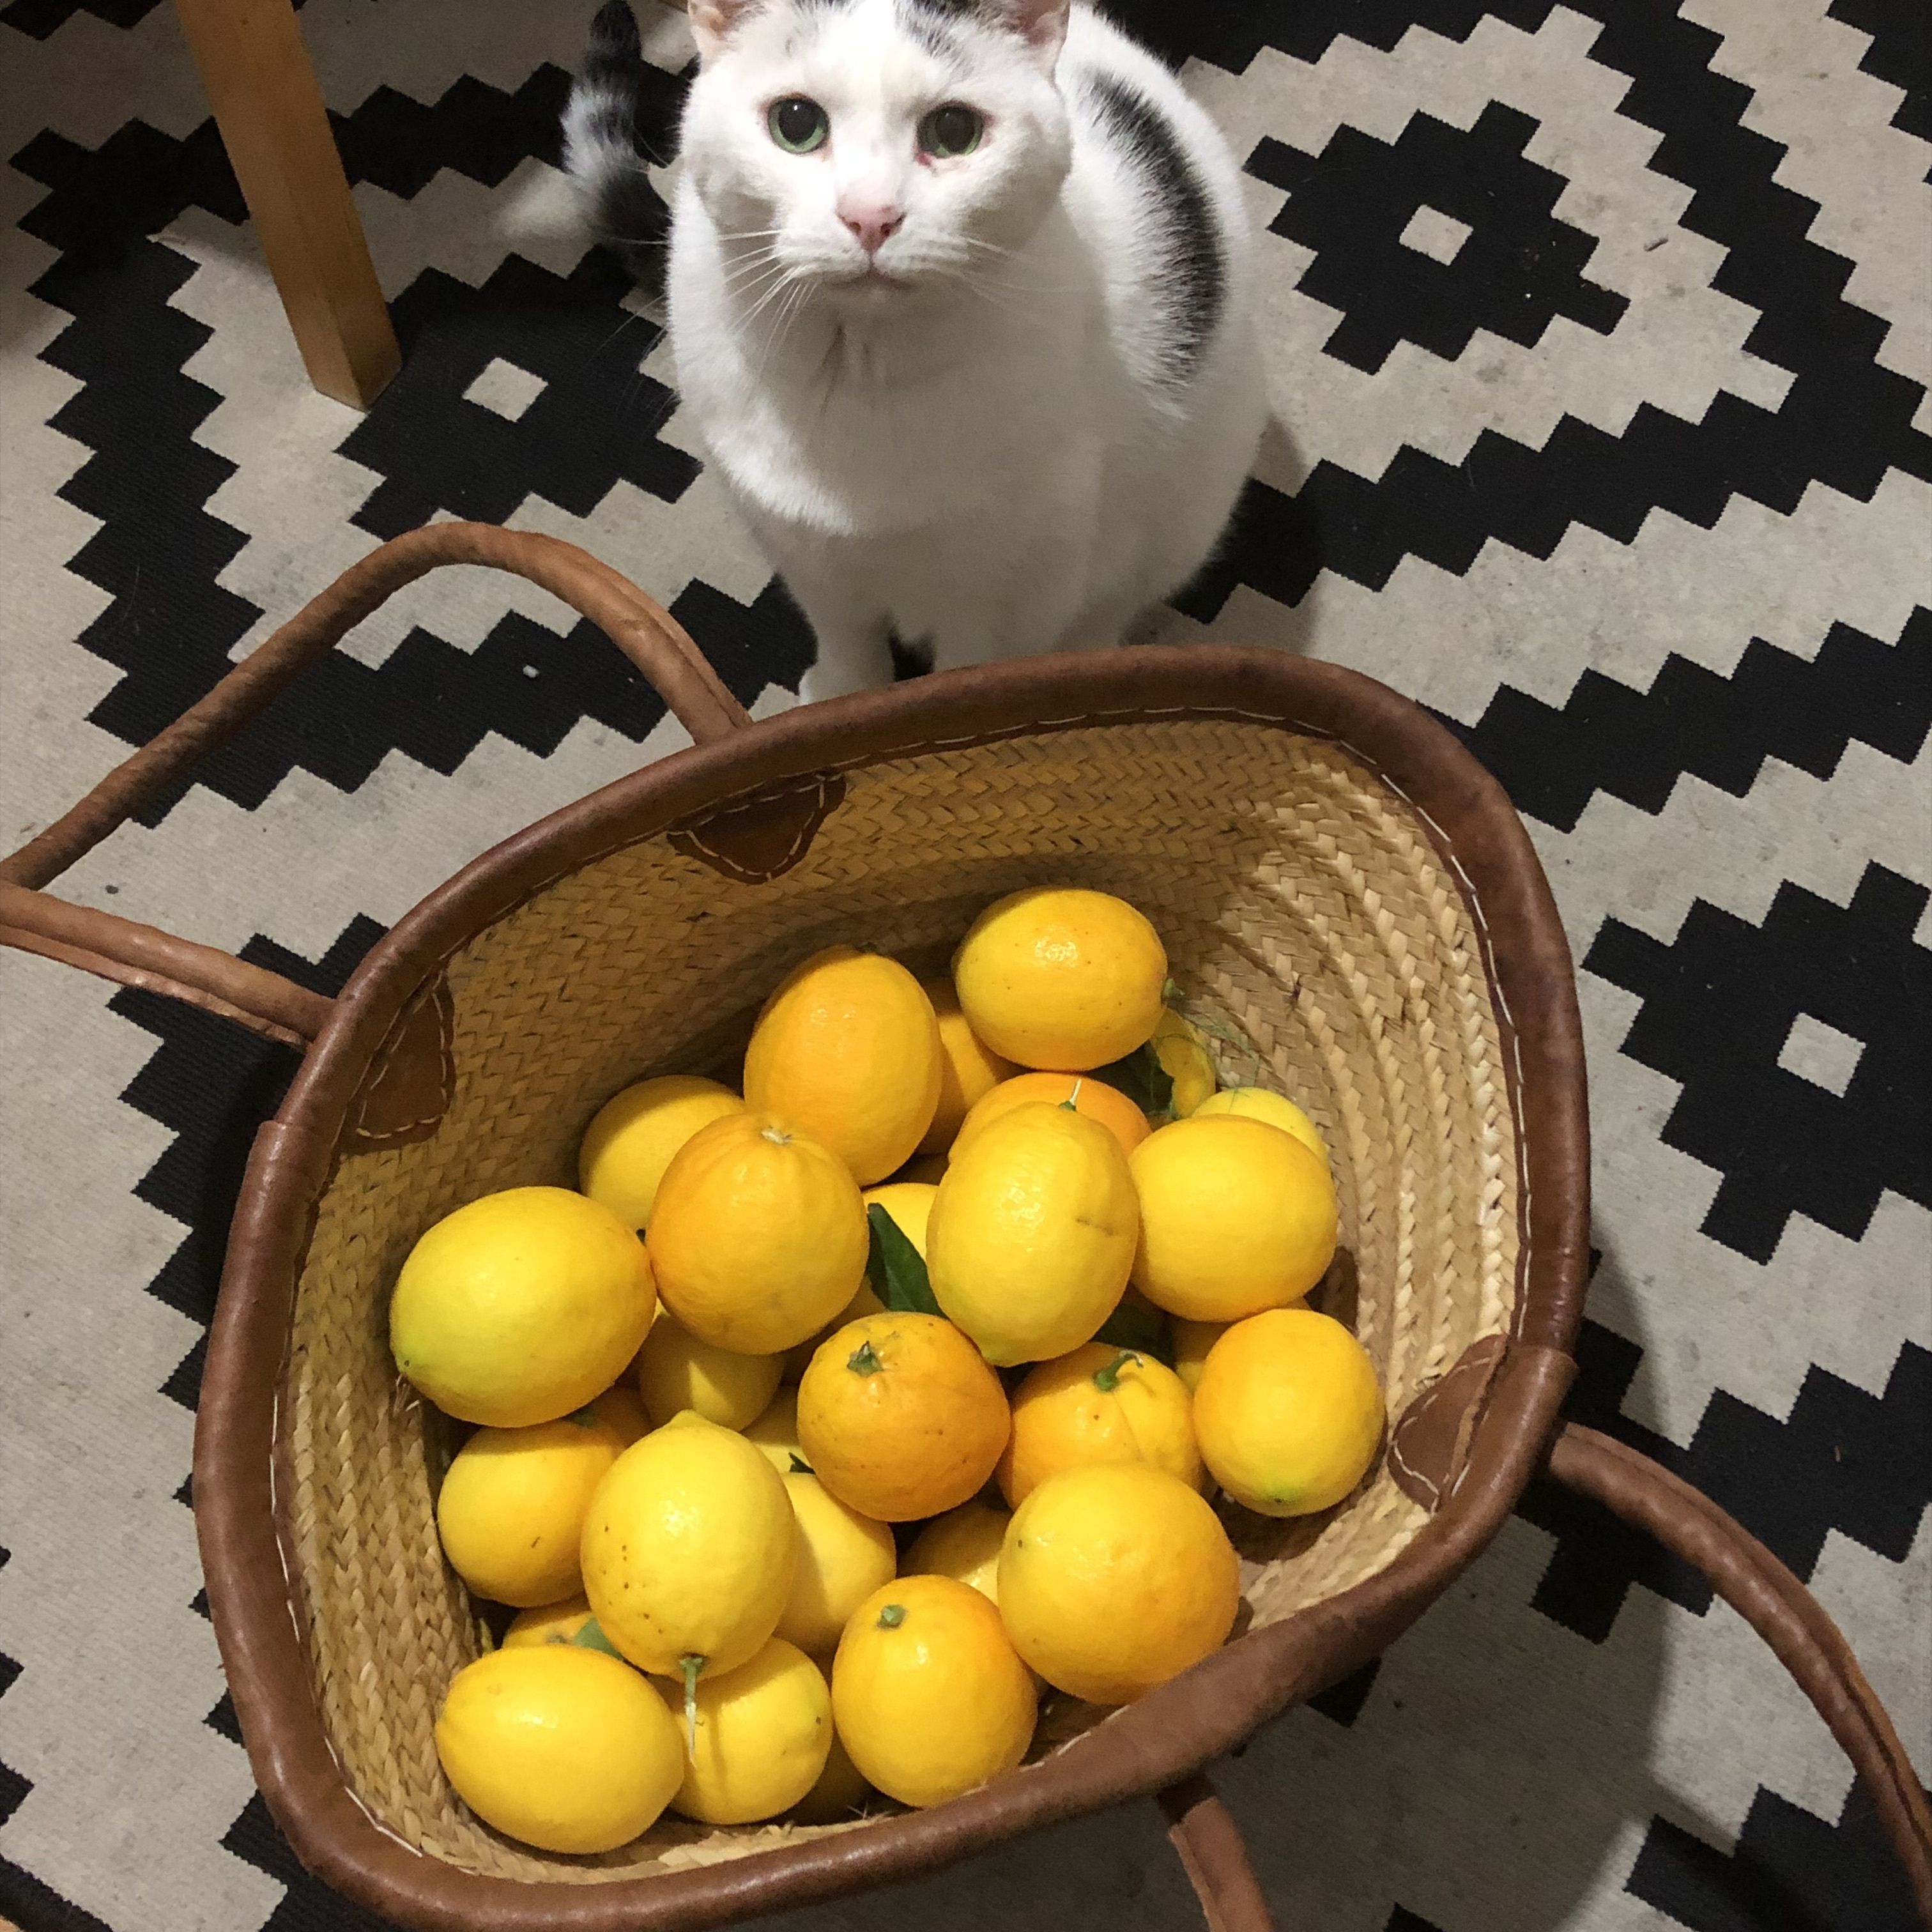 cat & bag of lemons